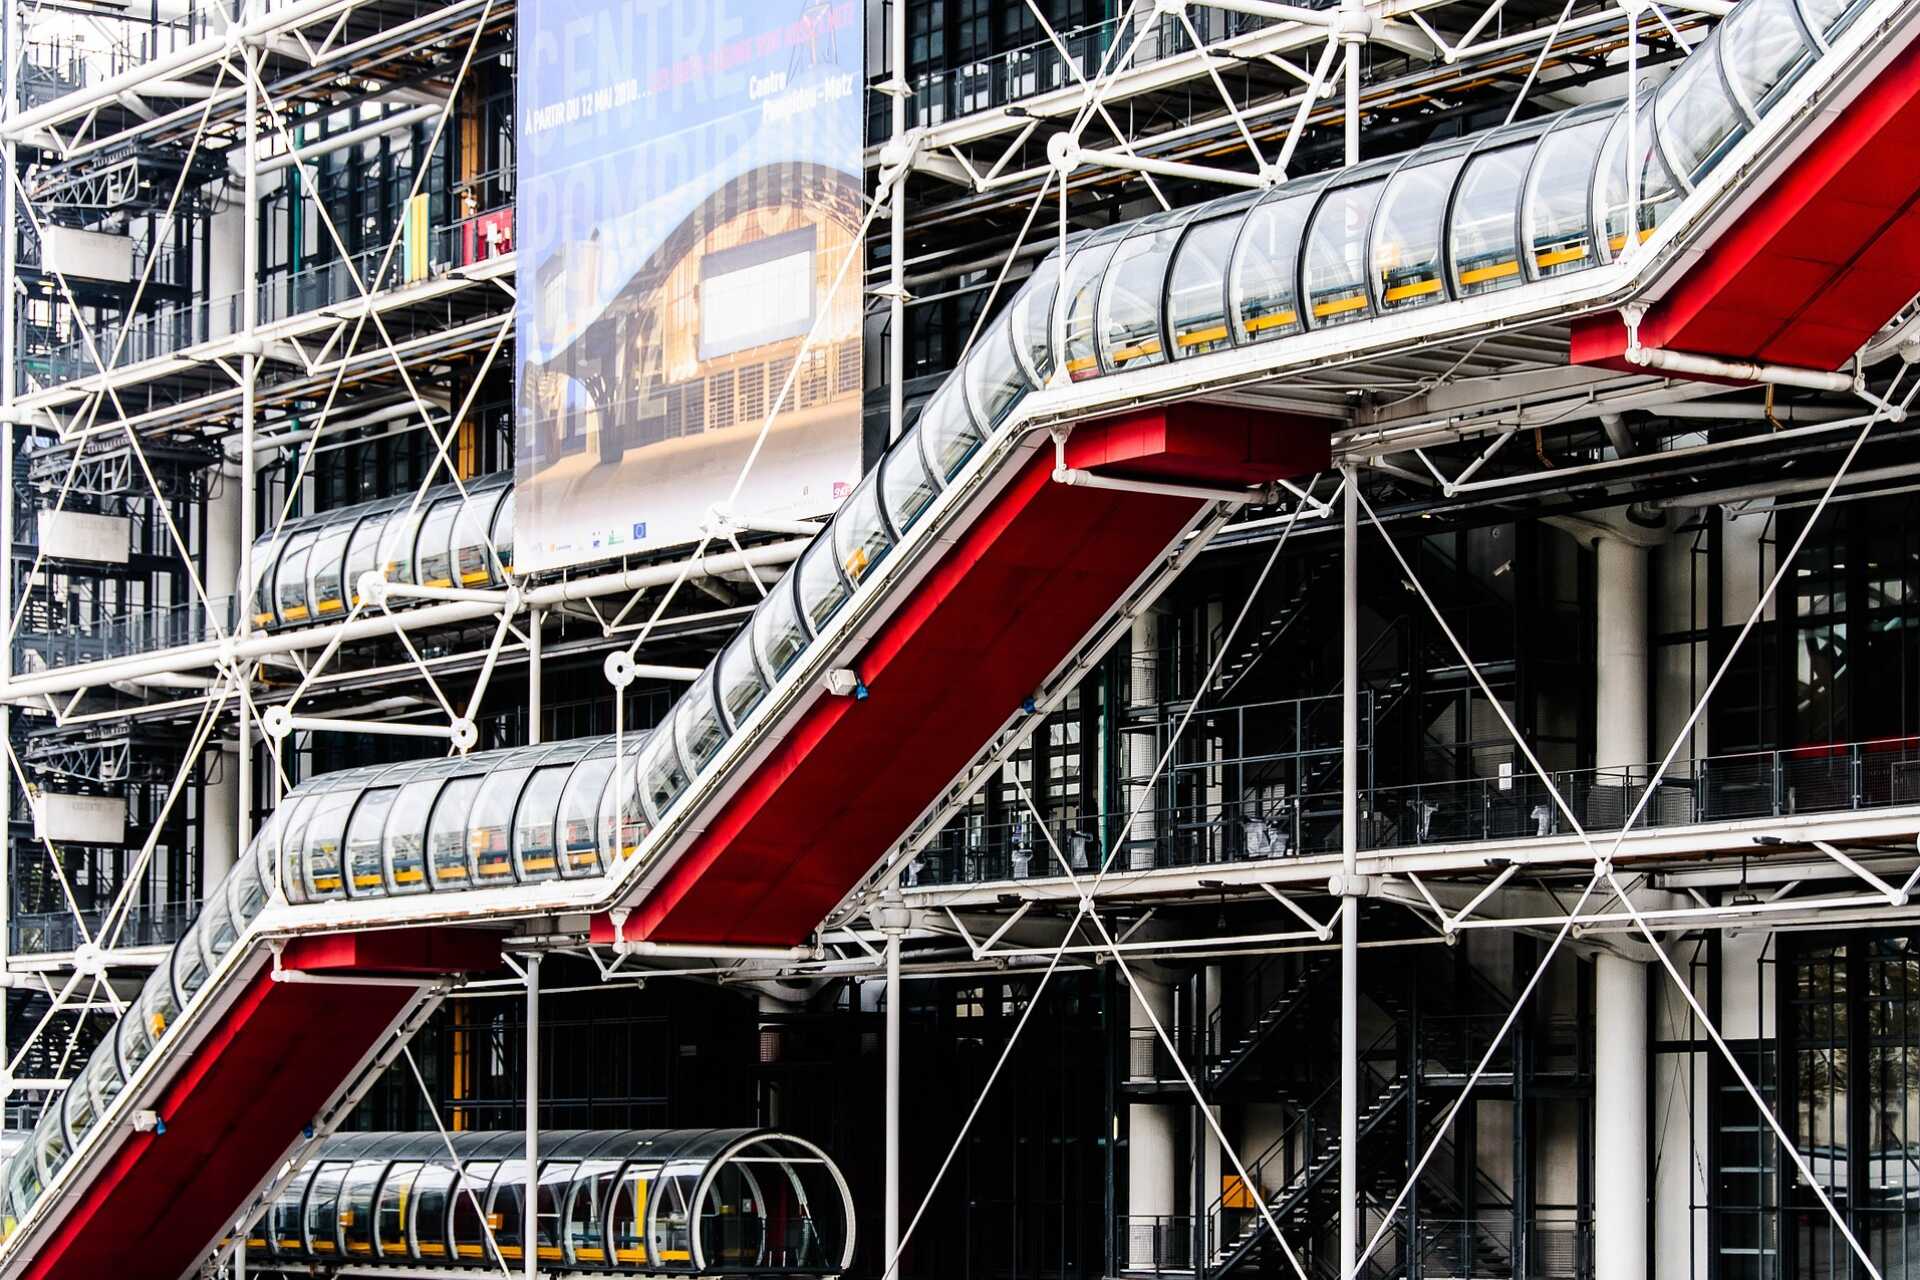 Pompidou centre, external shot